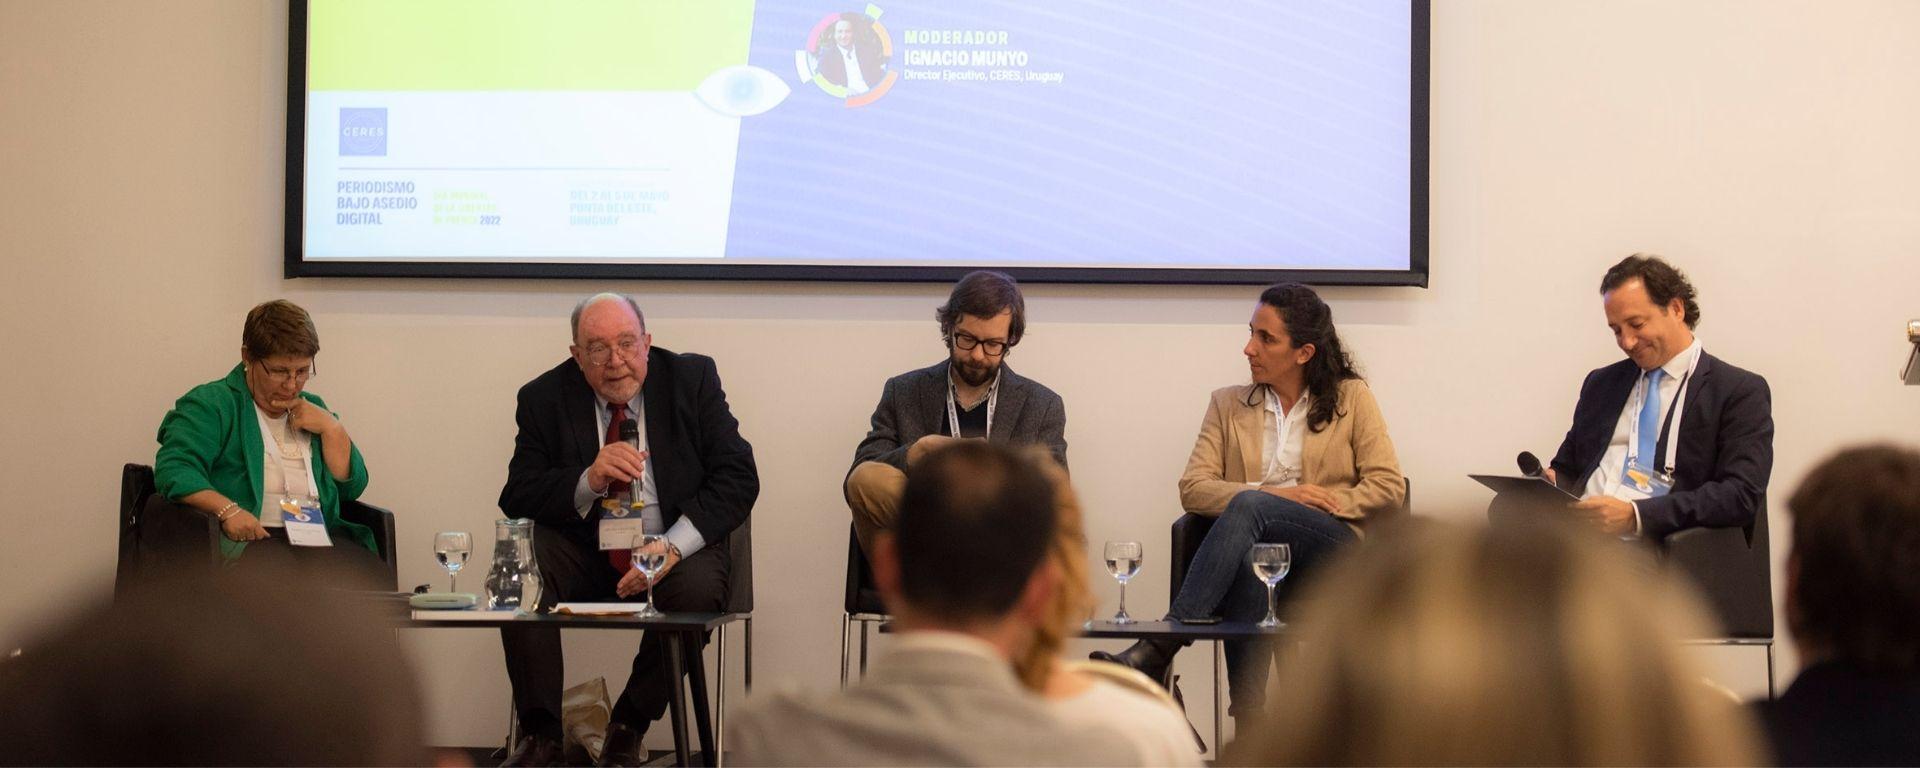 Libertad de Prensa en Internet, panel con Mariella Saettone, Tomás Linn, Álvaro Pérez, Natalia Uval y moderador Ignacio Munyo.